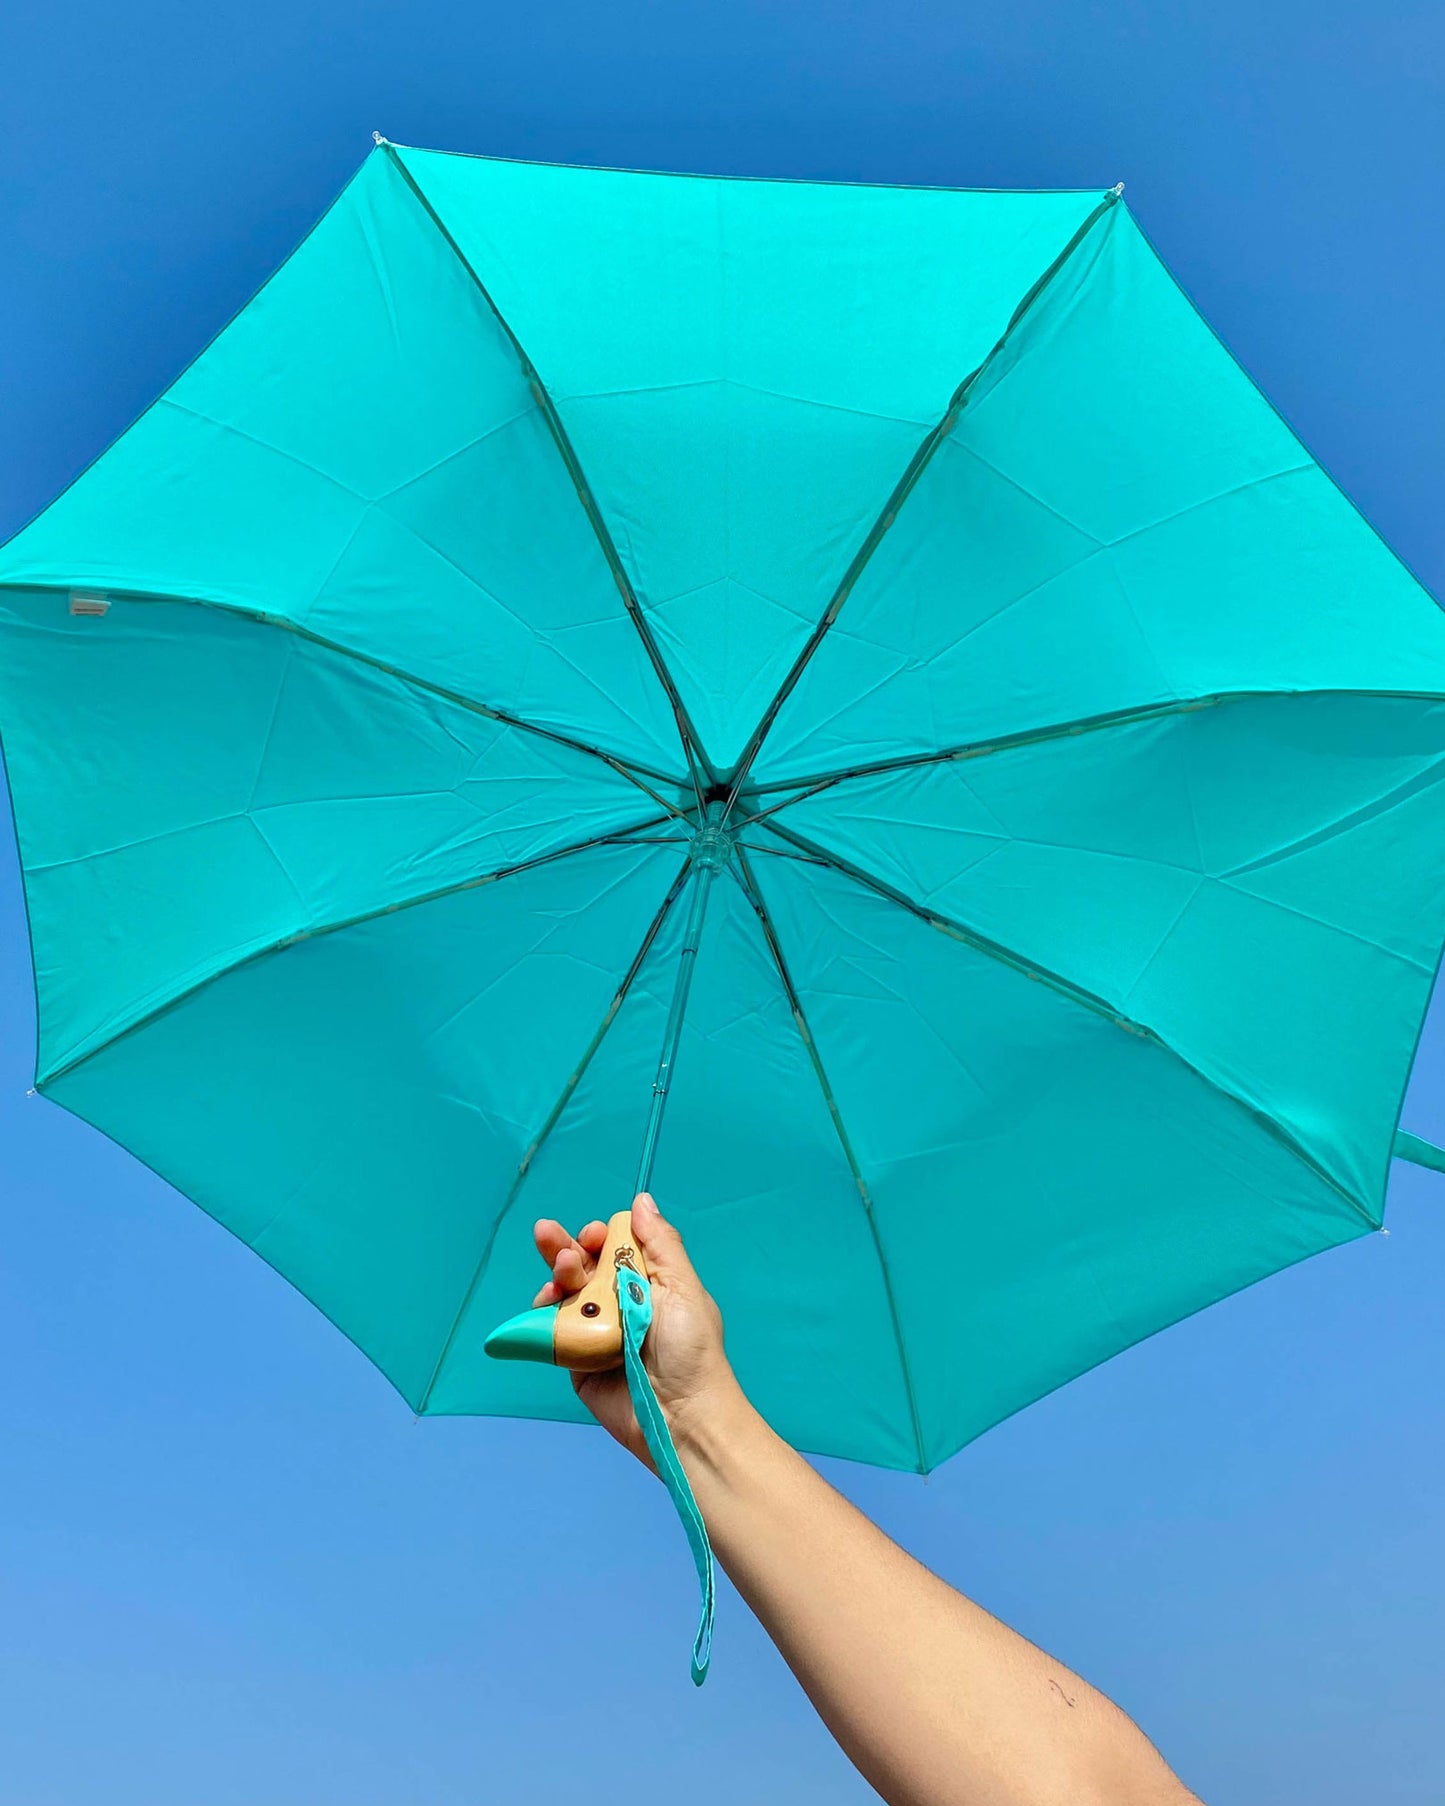 ORIGINAL DUCKHEAD Compact Umbrella in Mint available at Lahn.shop